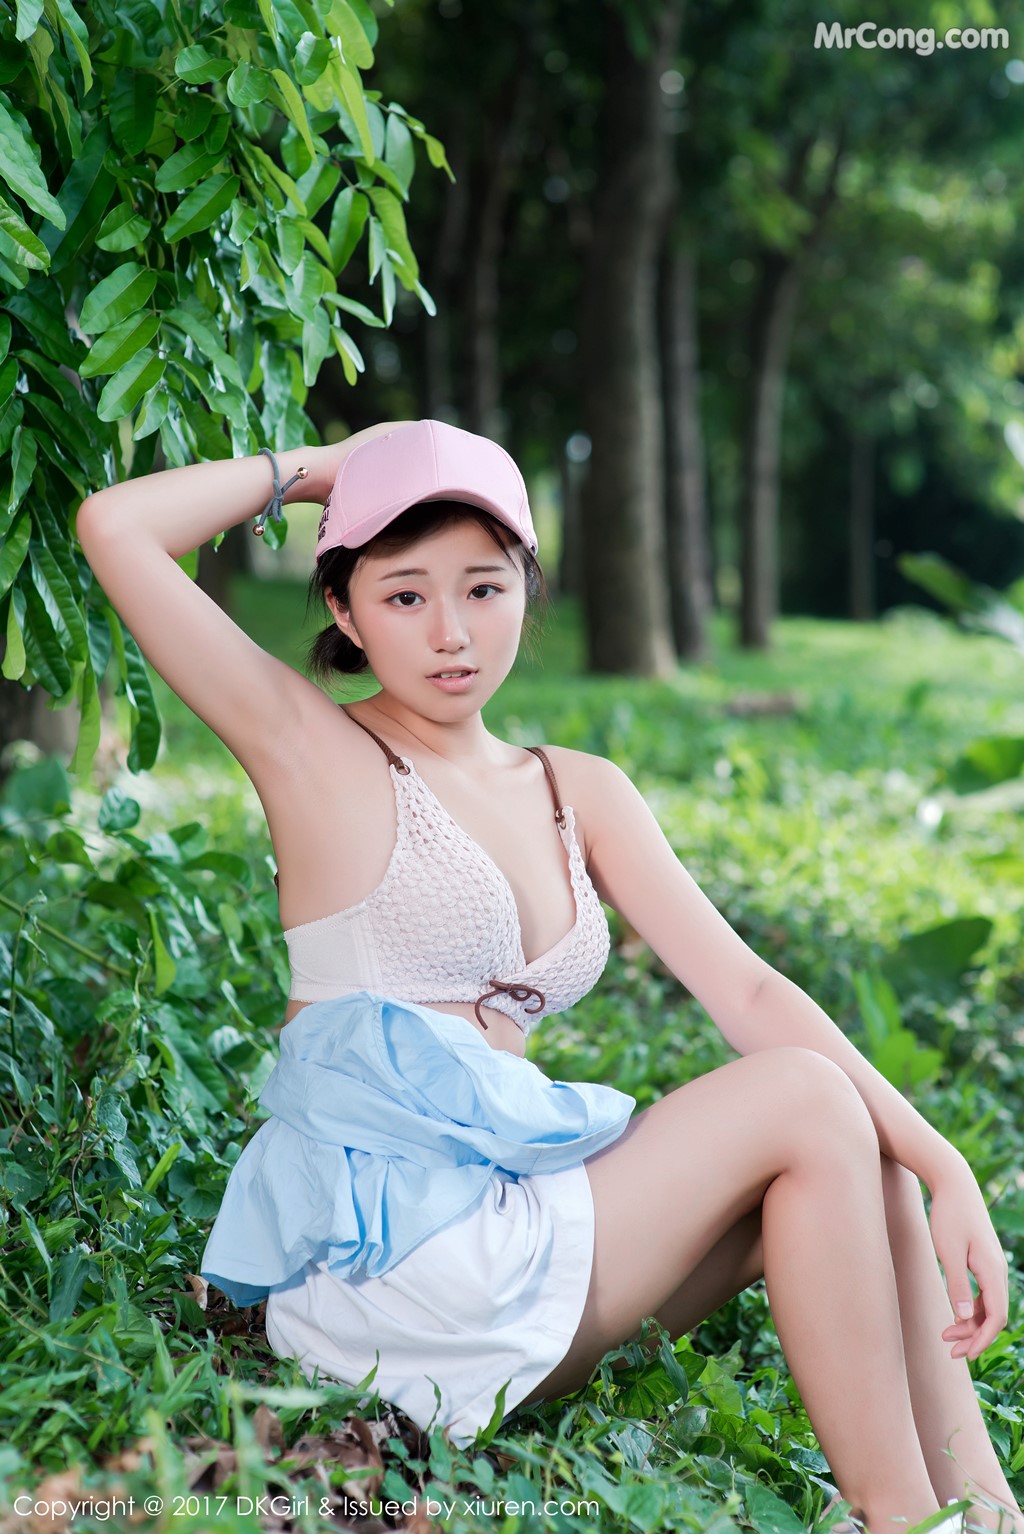 DKGirl Vol.039: Model Cang Jing You Xiang (仓 井 优香) (57 photos)